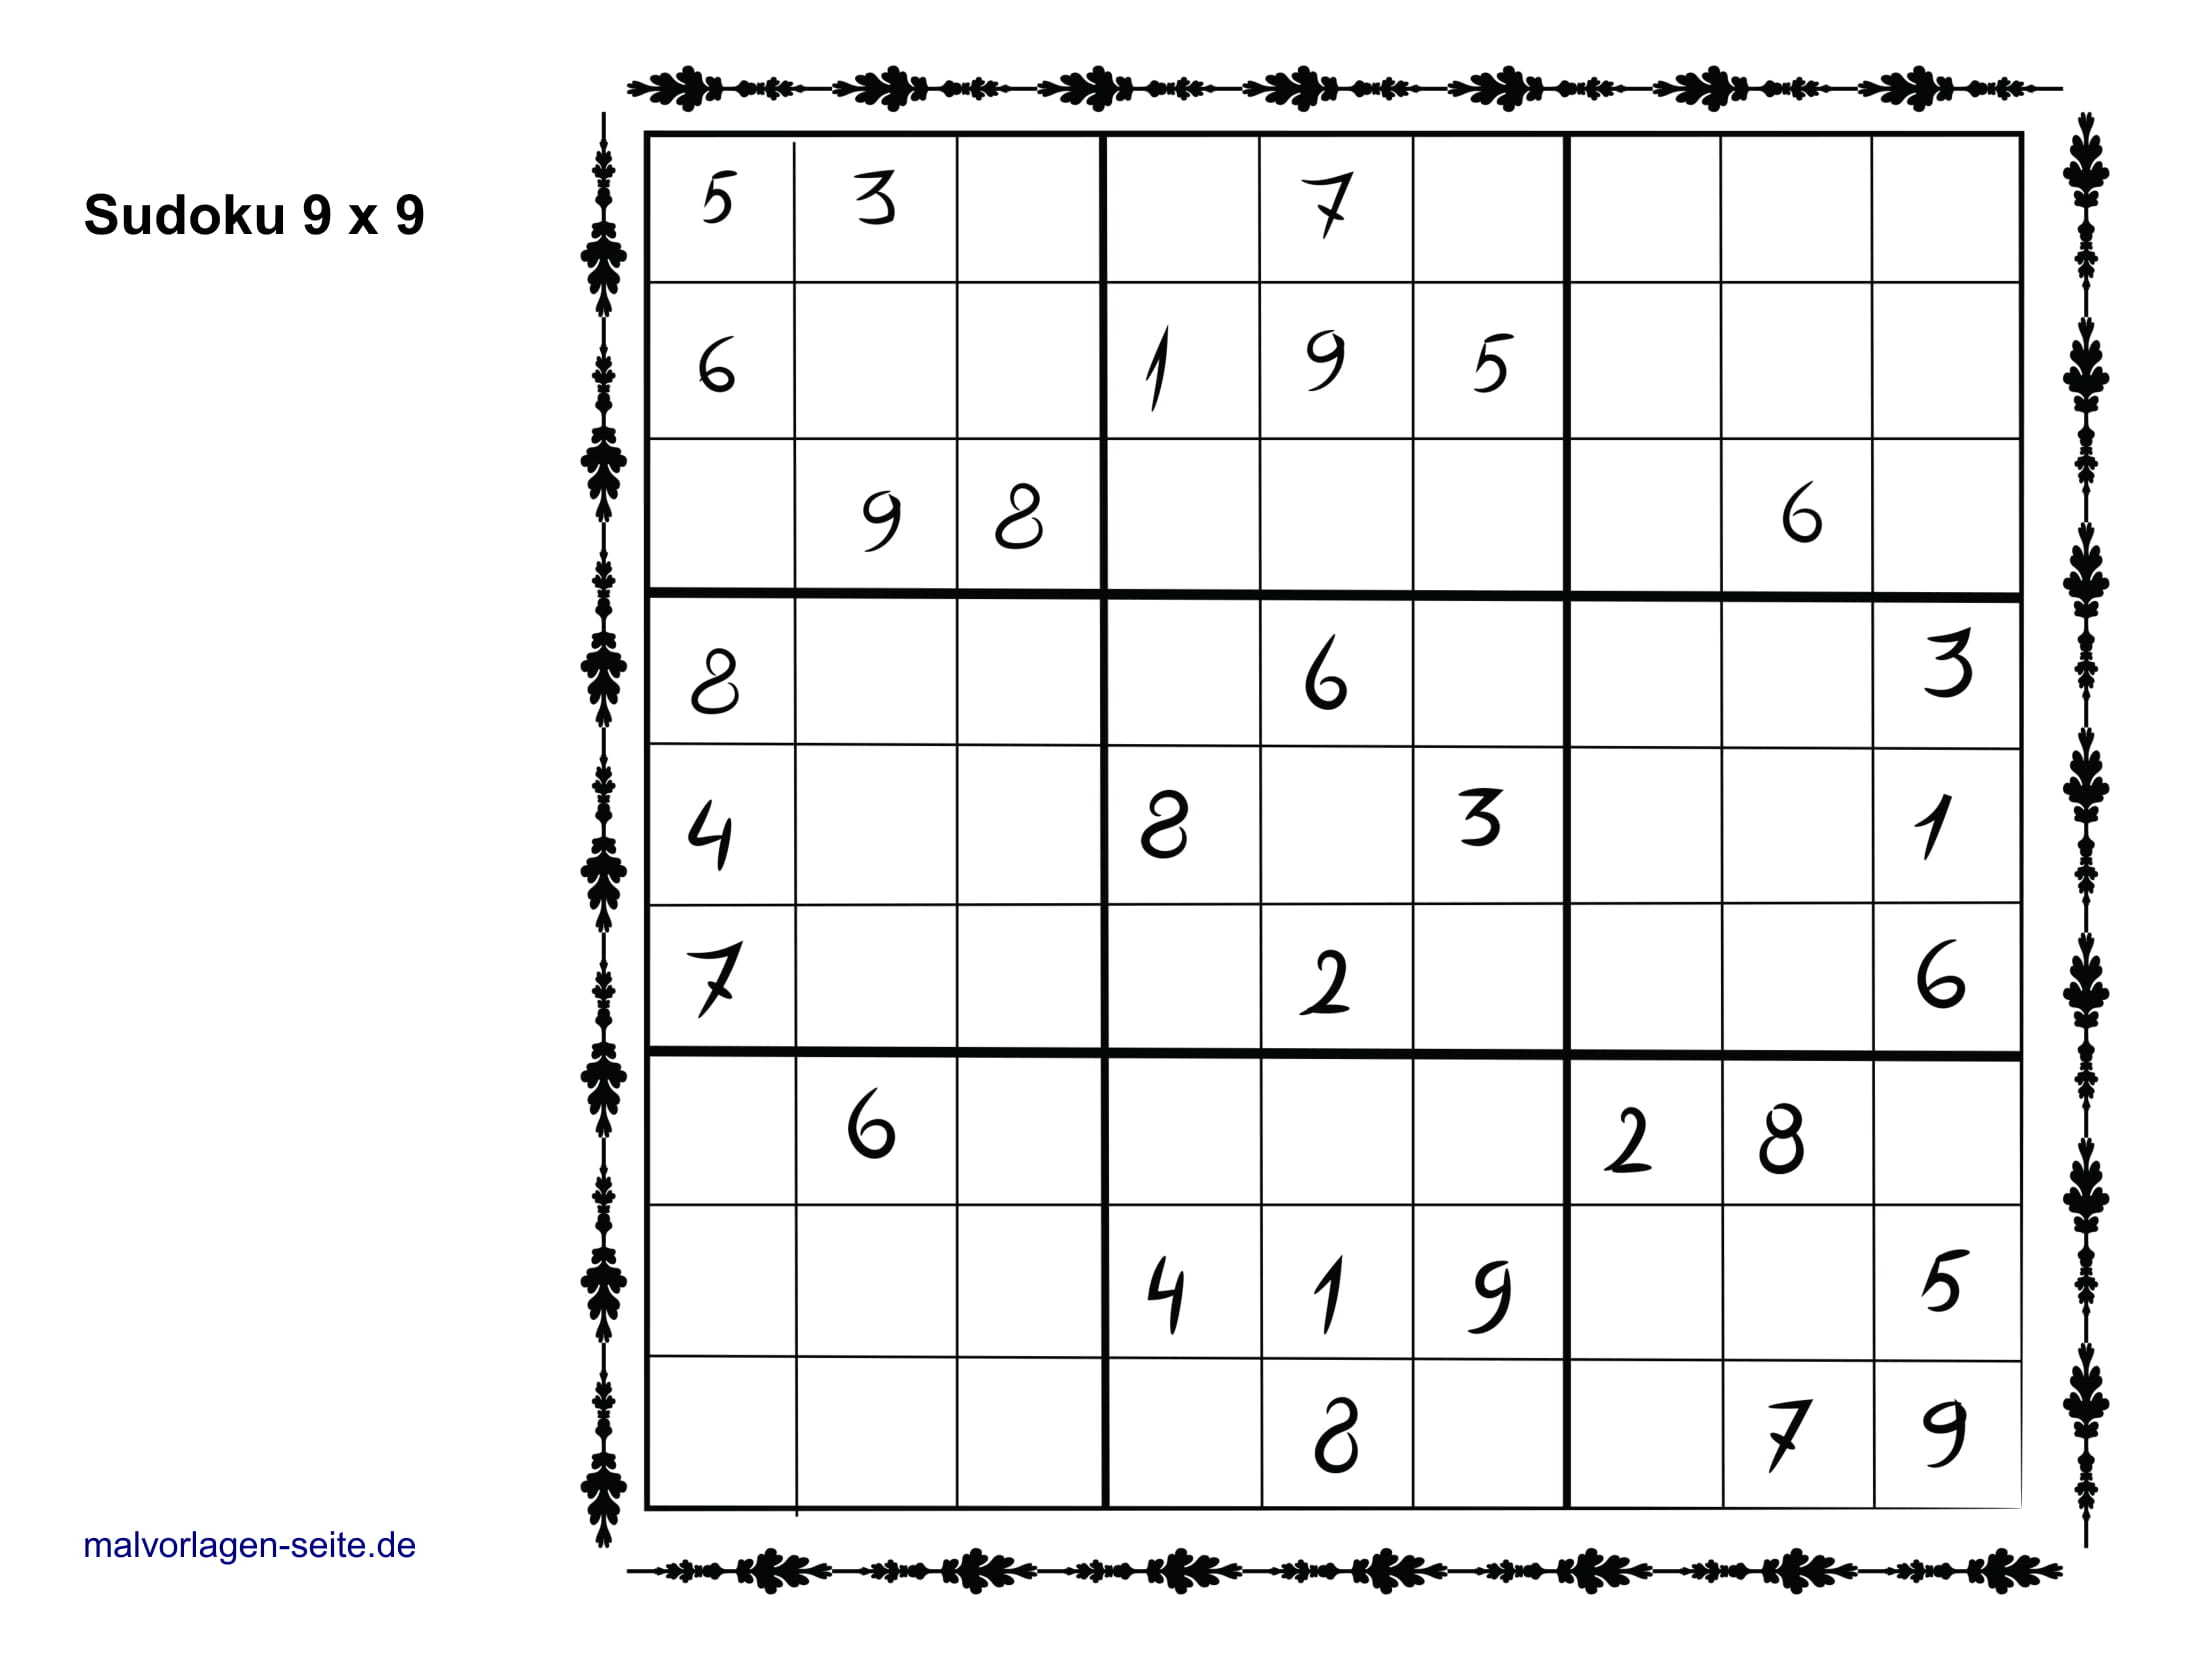 sudoku 9x9 easy java pdf